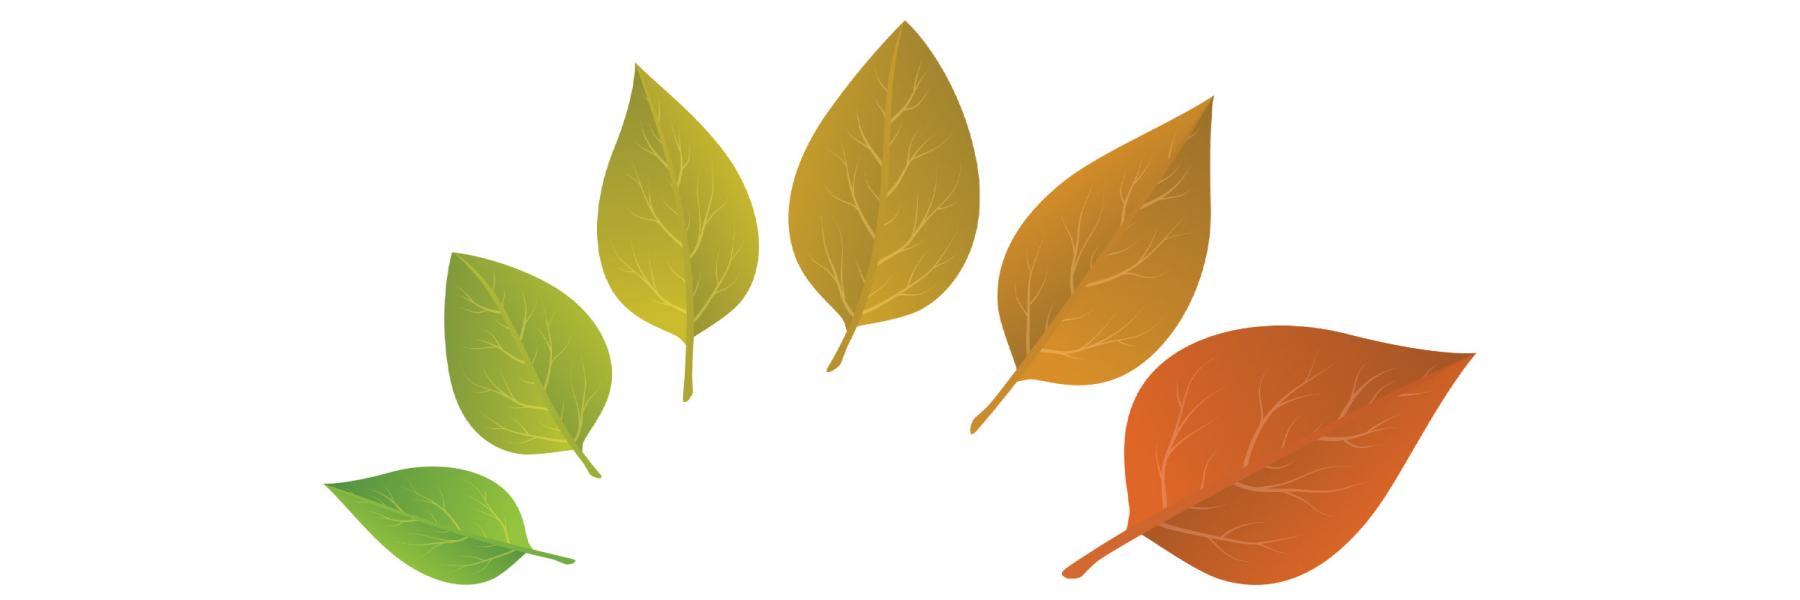 A semi-circular arrange of leaves seen changing color, getting progressively older